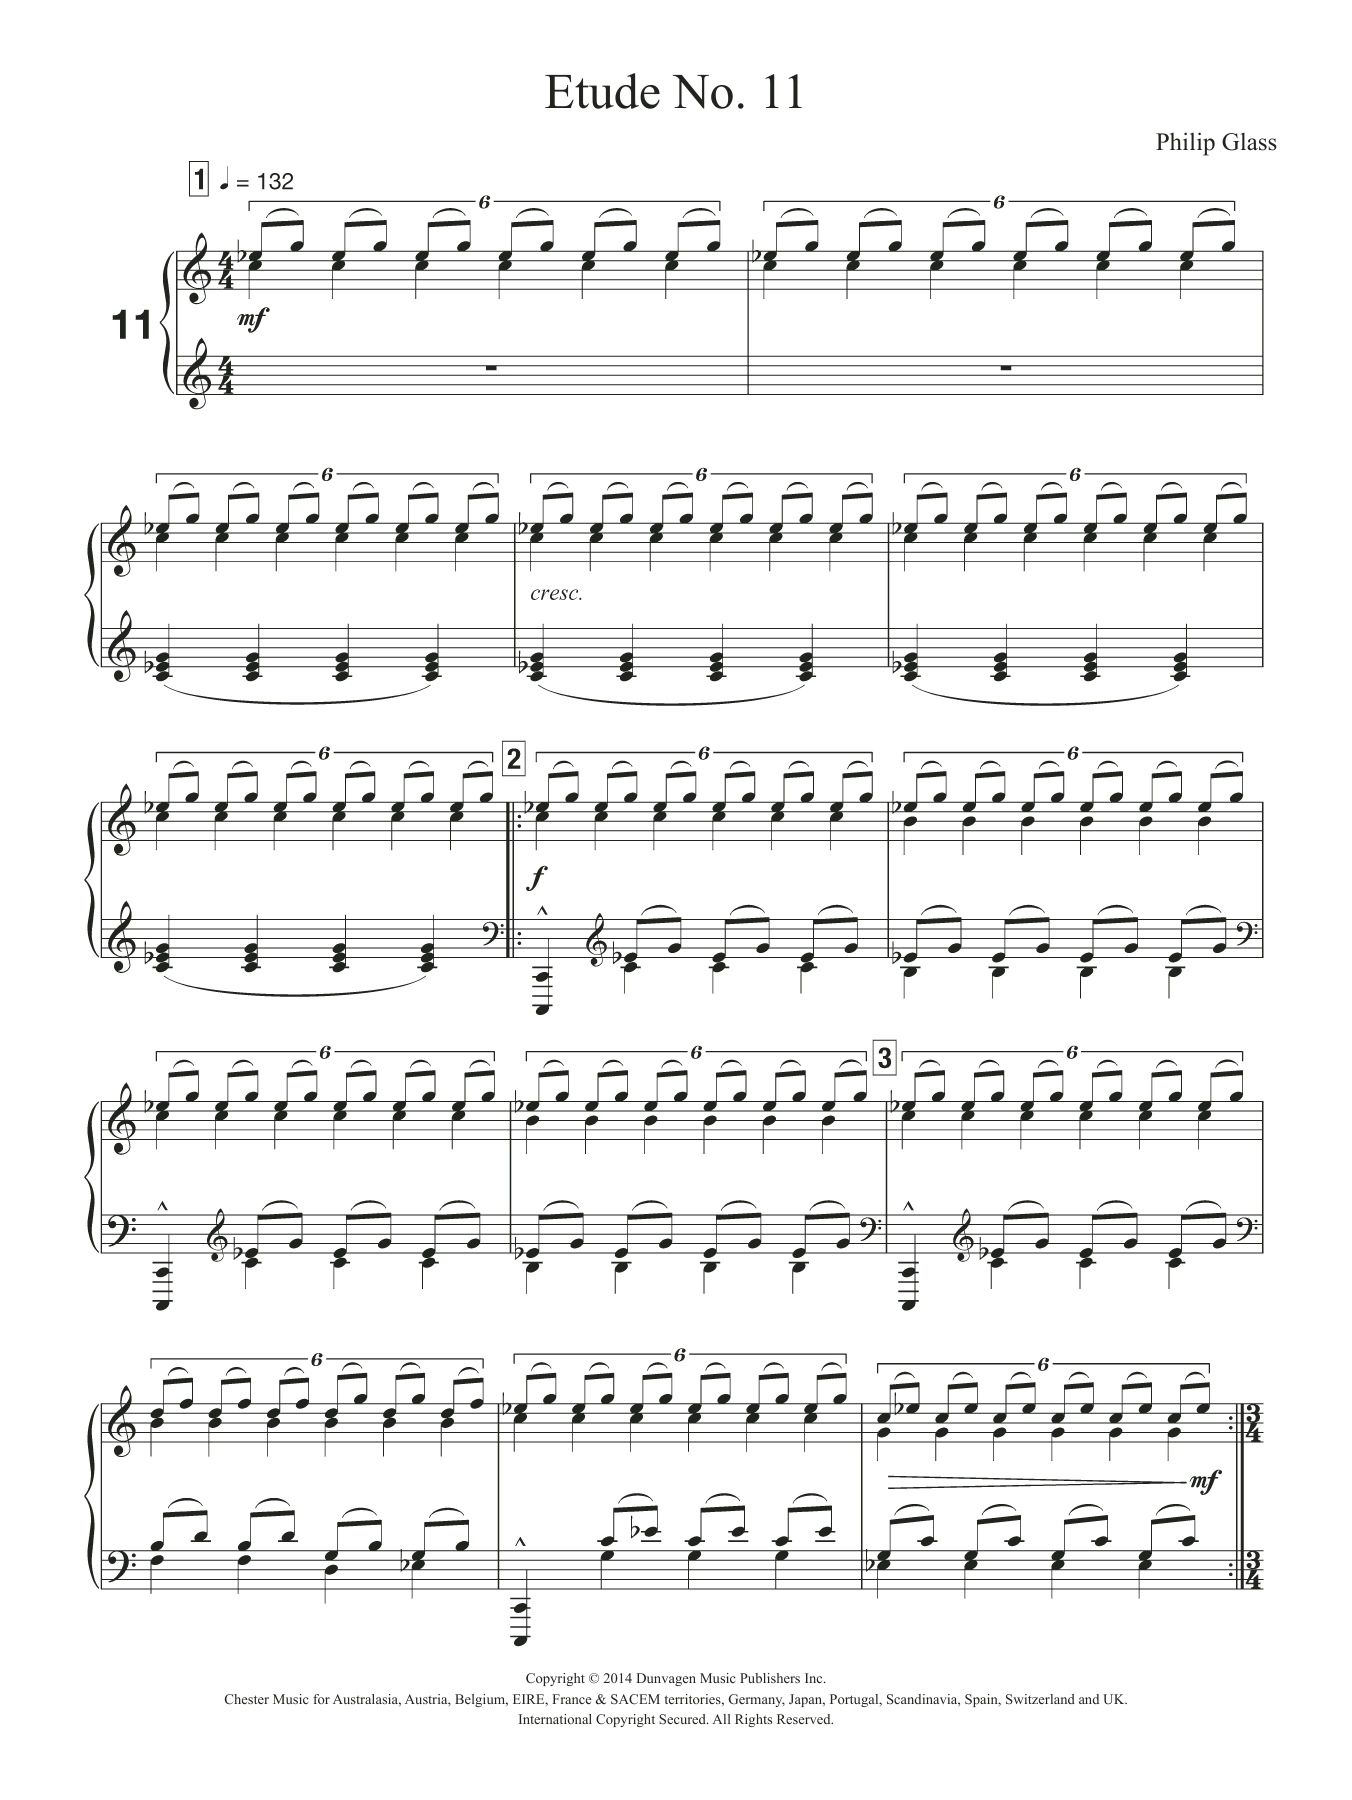 Download Philip Glass Etude No. 11 Sheet Music